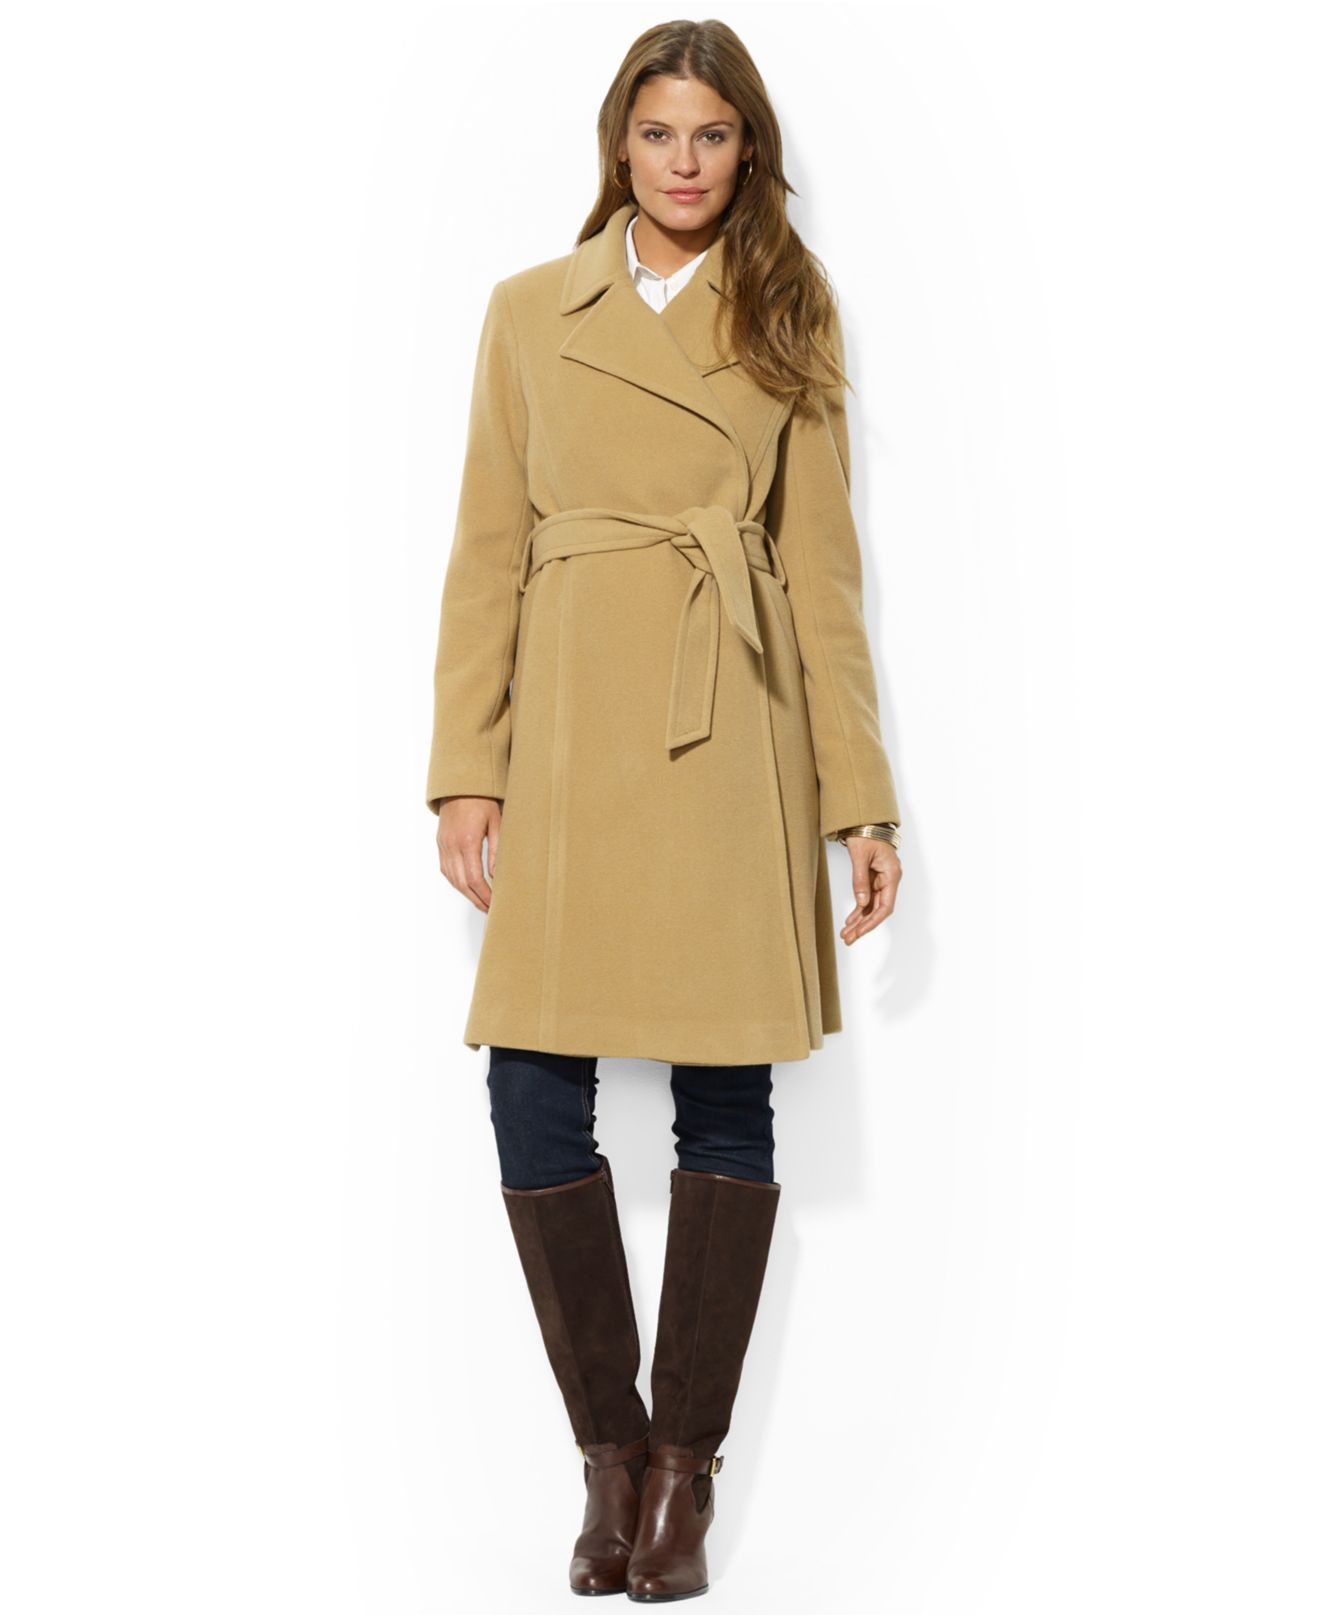 Lyst - Lauren by Ralph Lauren Wool-Cashmere-Blend Belted Wrap Coat in ...